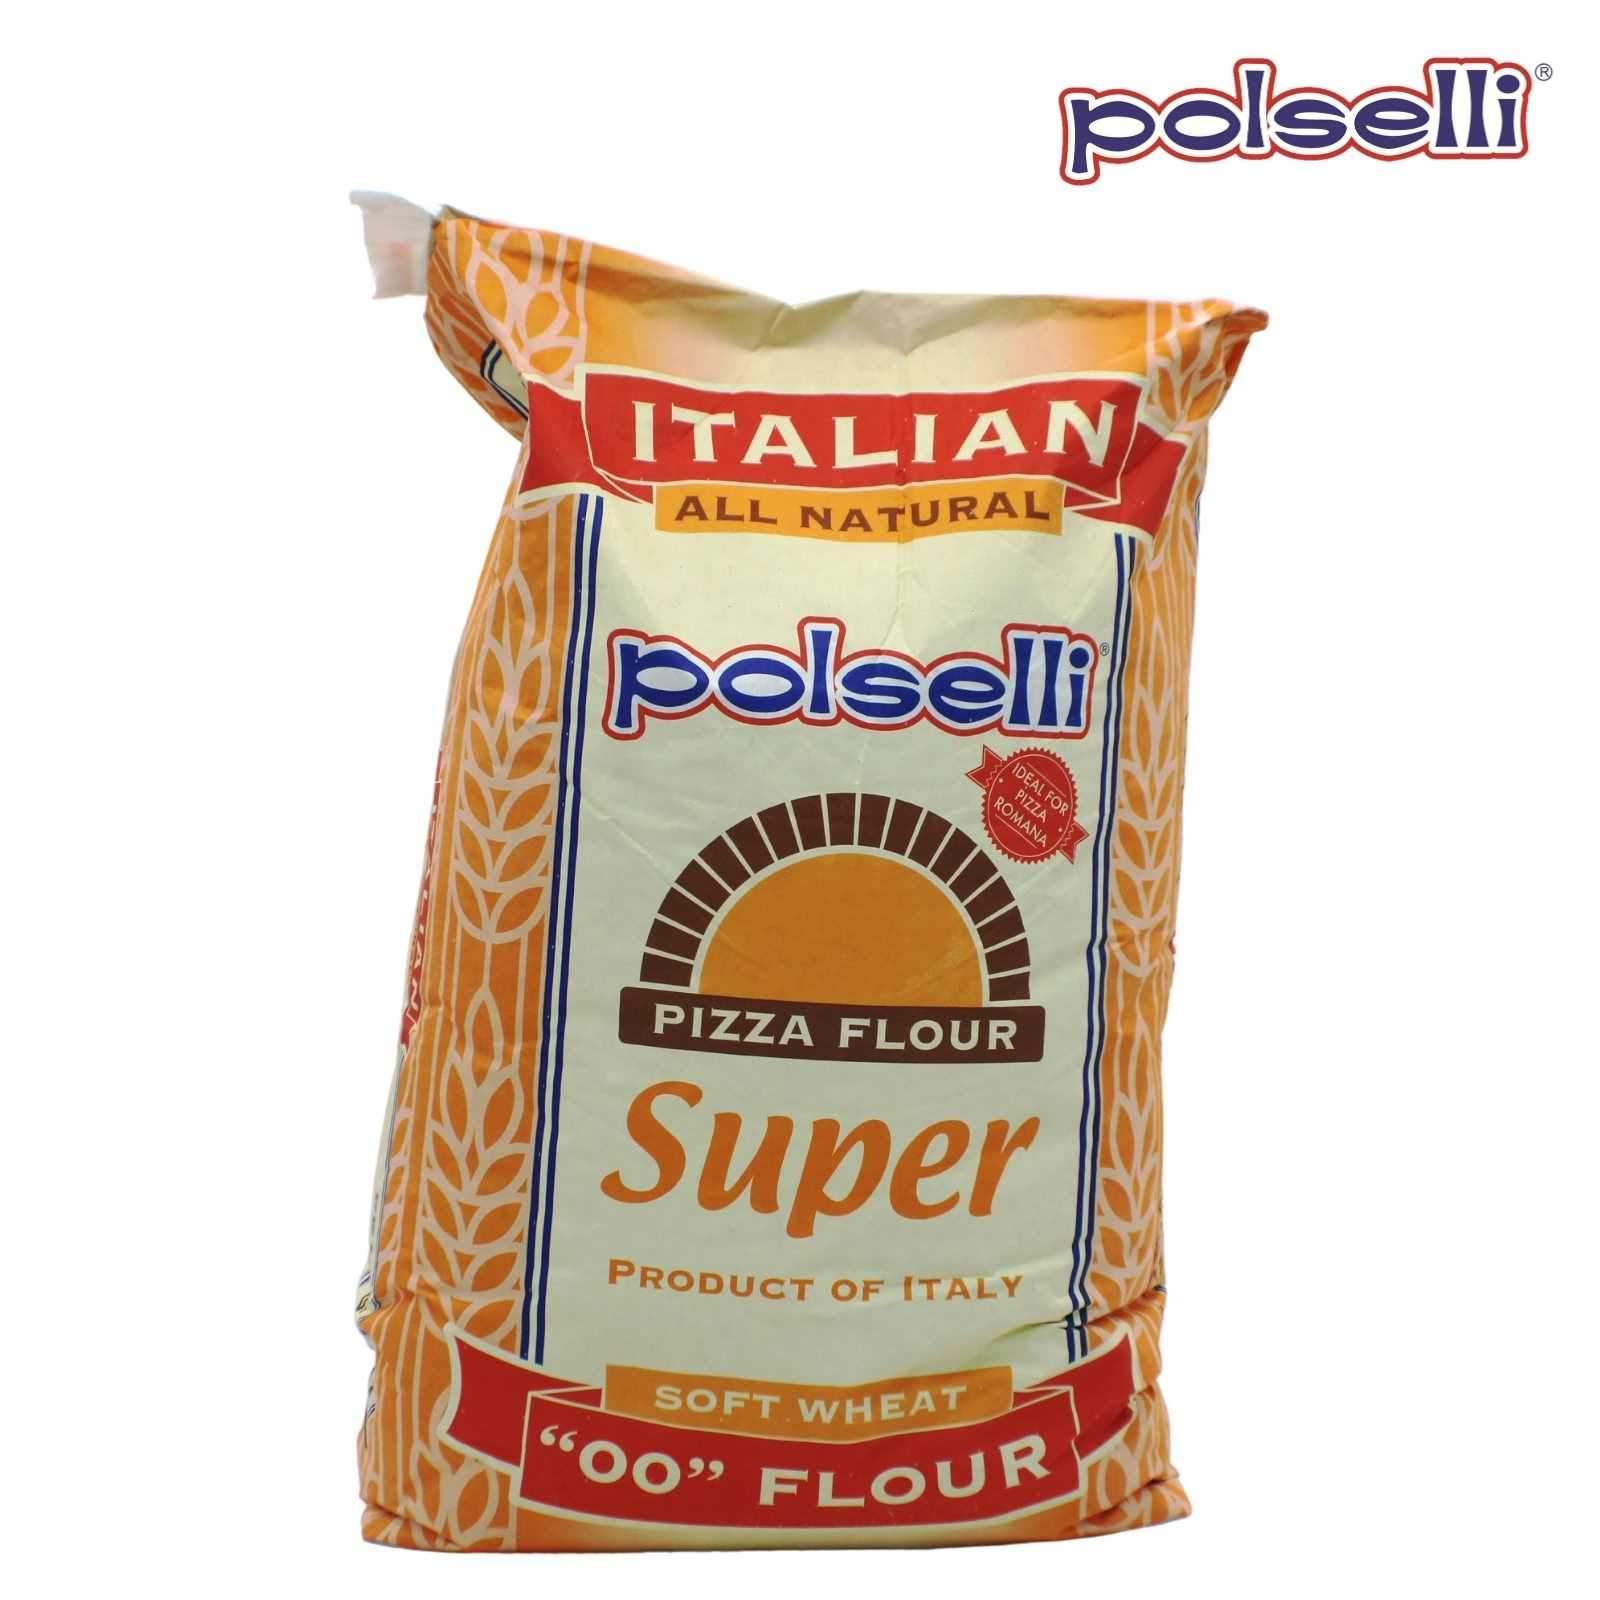 Polselli Super Pizza Flour 55lbs